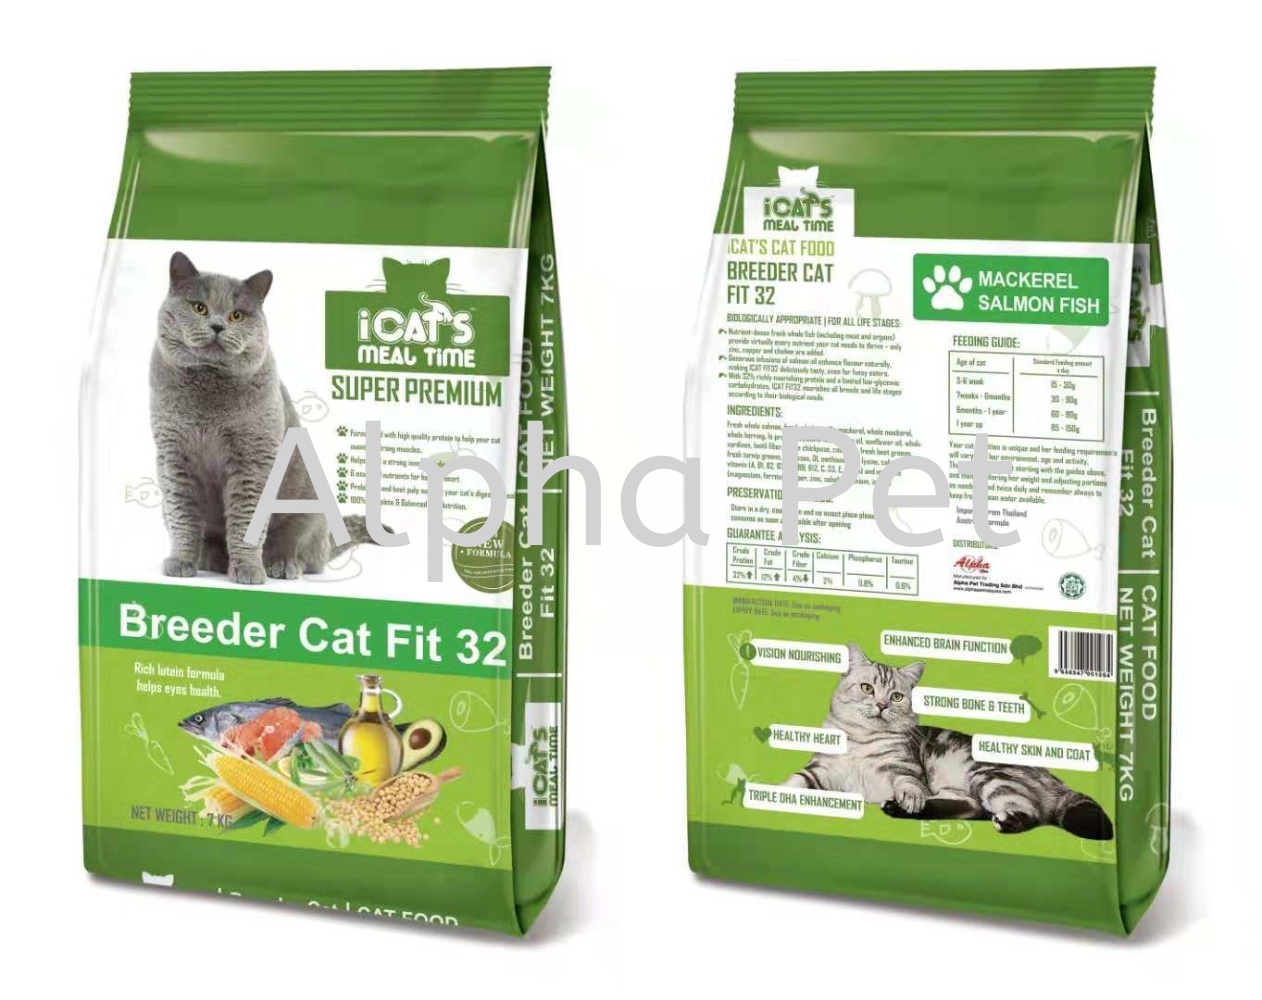 iCat's Meal Time Super Premium Cat Food - Breeder Cat Fit 32